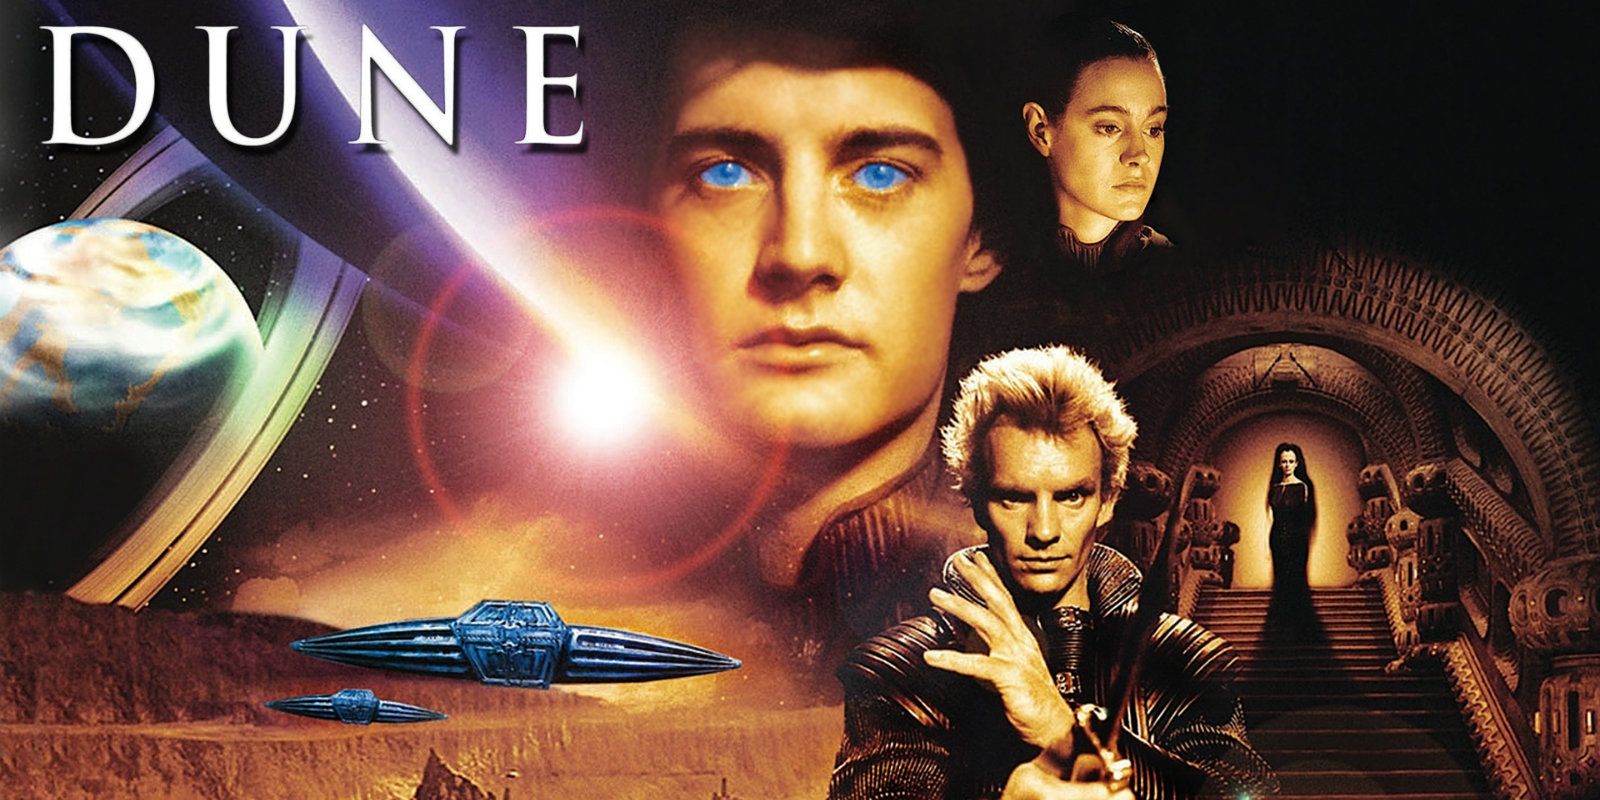 Dune (1984) movie artwork